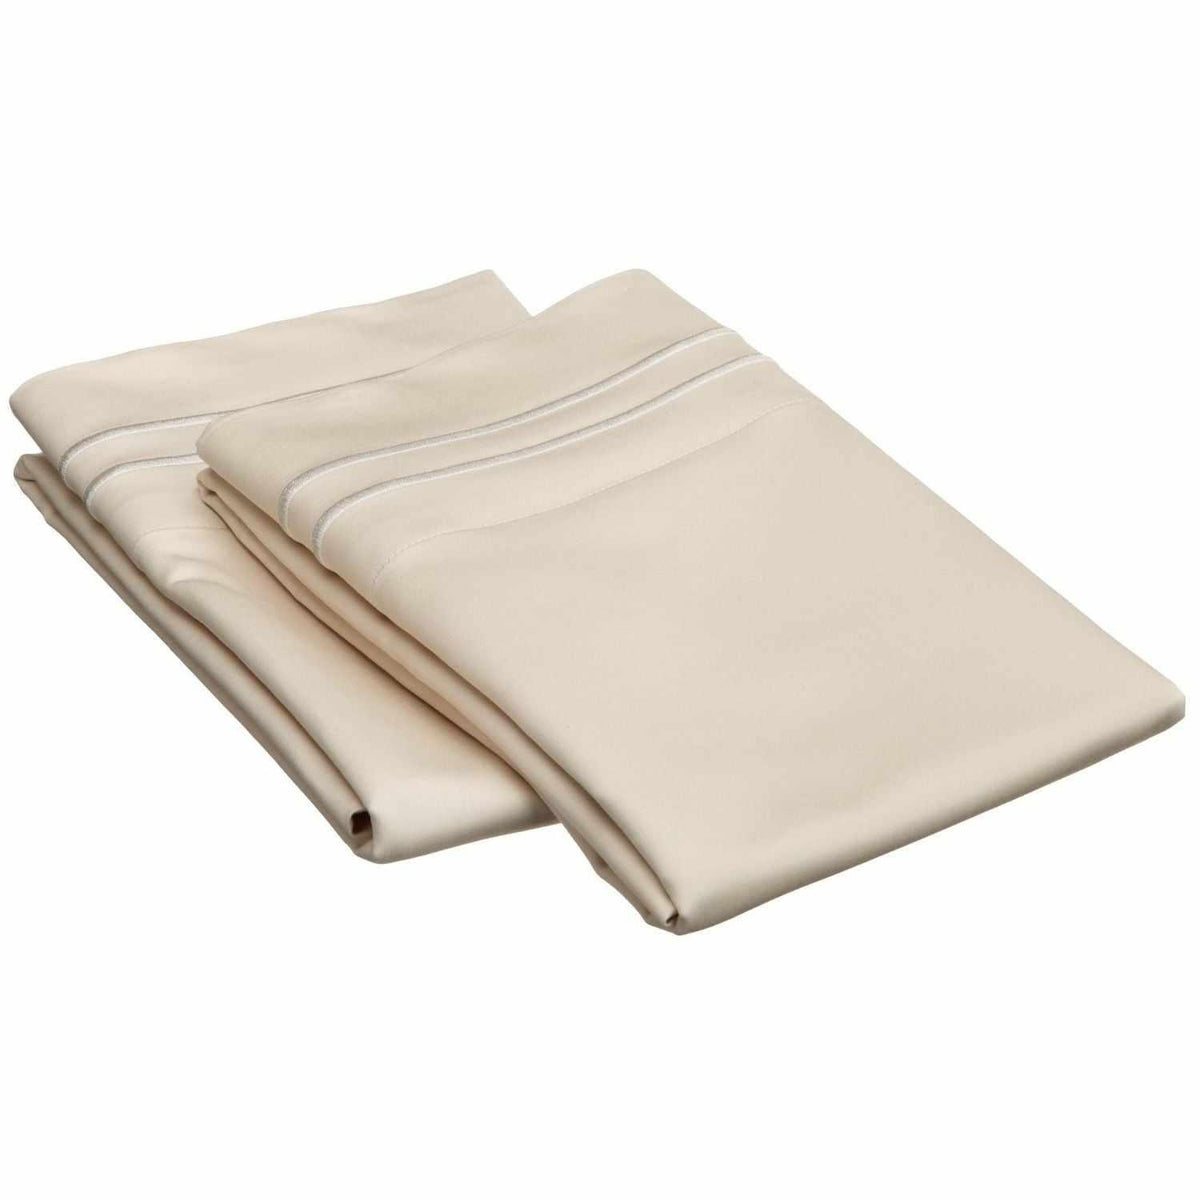 2 Embroidered Line Egyptian Cotton 2-Piece Pillowcase Set - Ivory